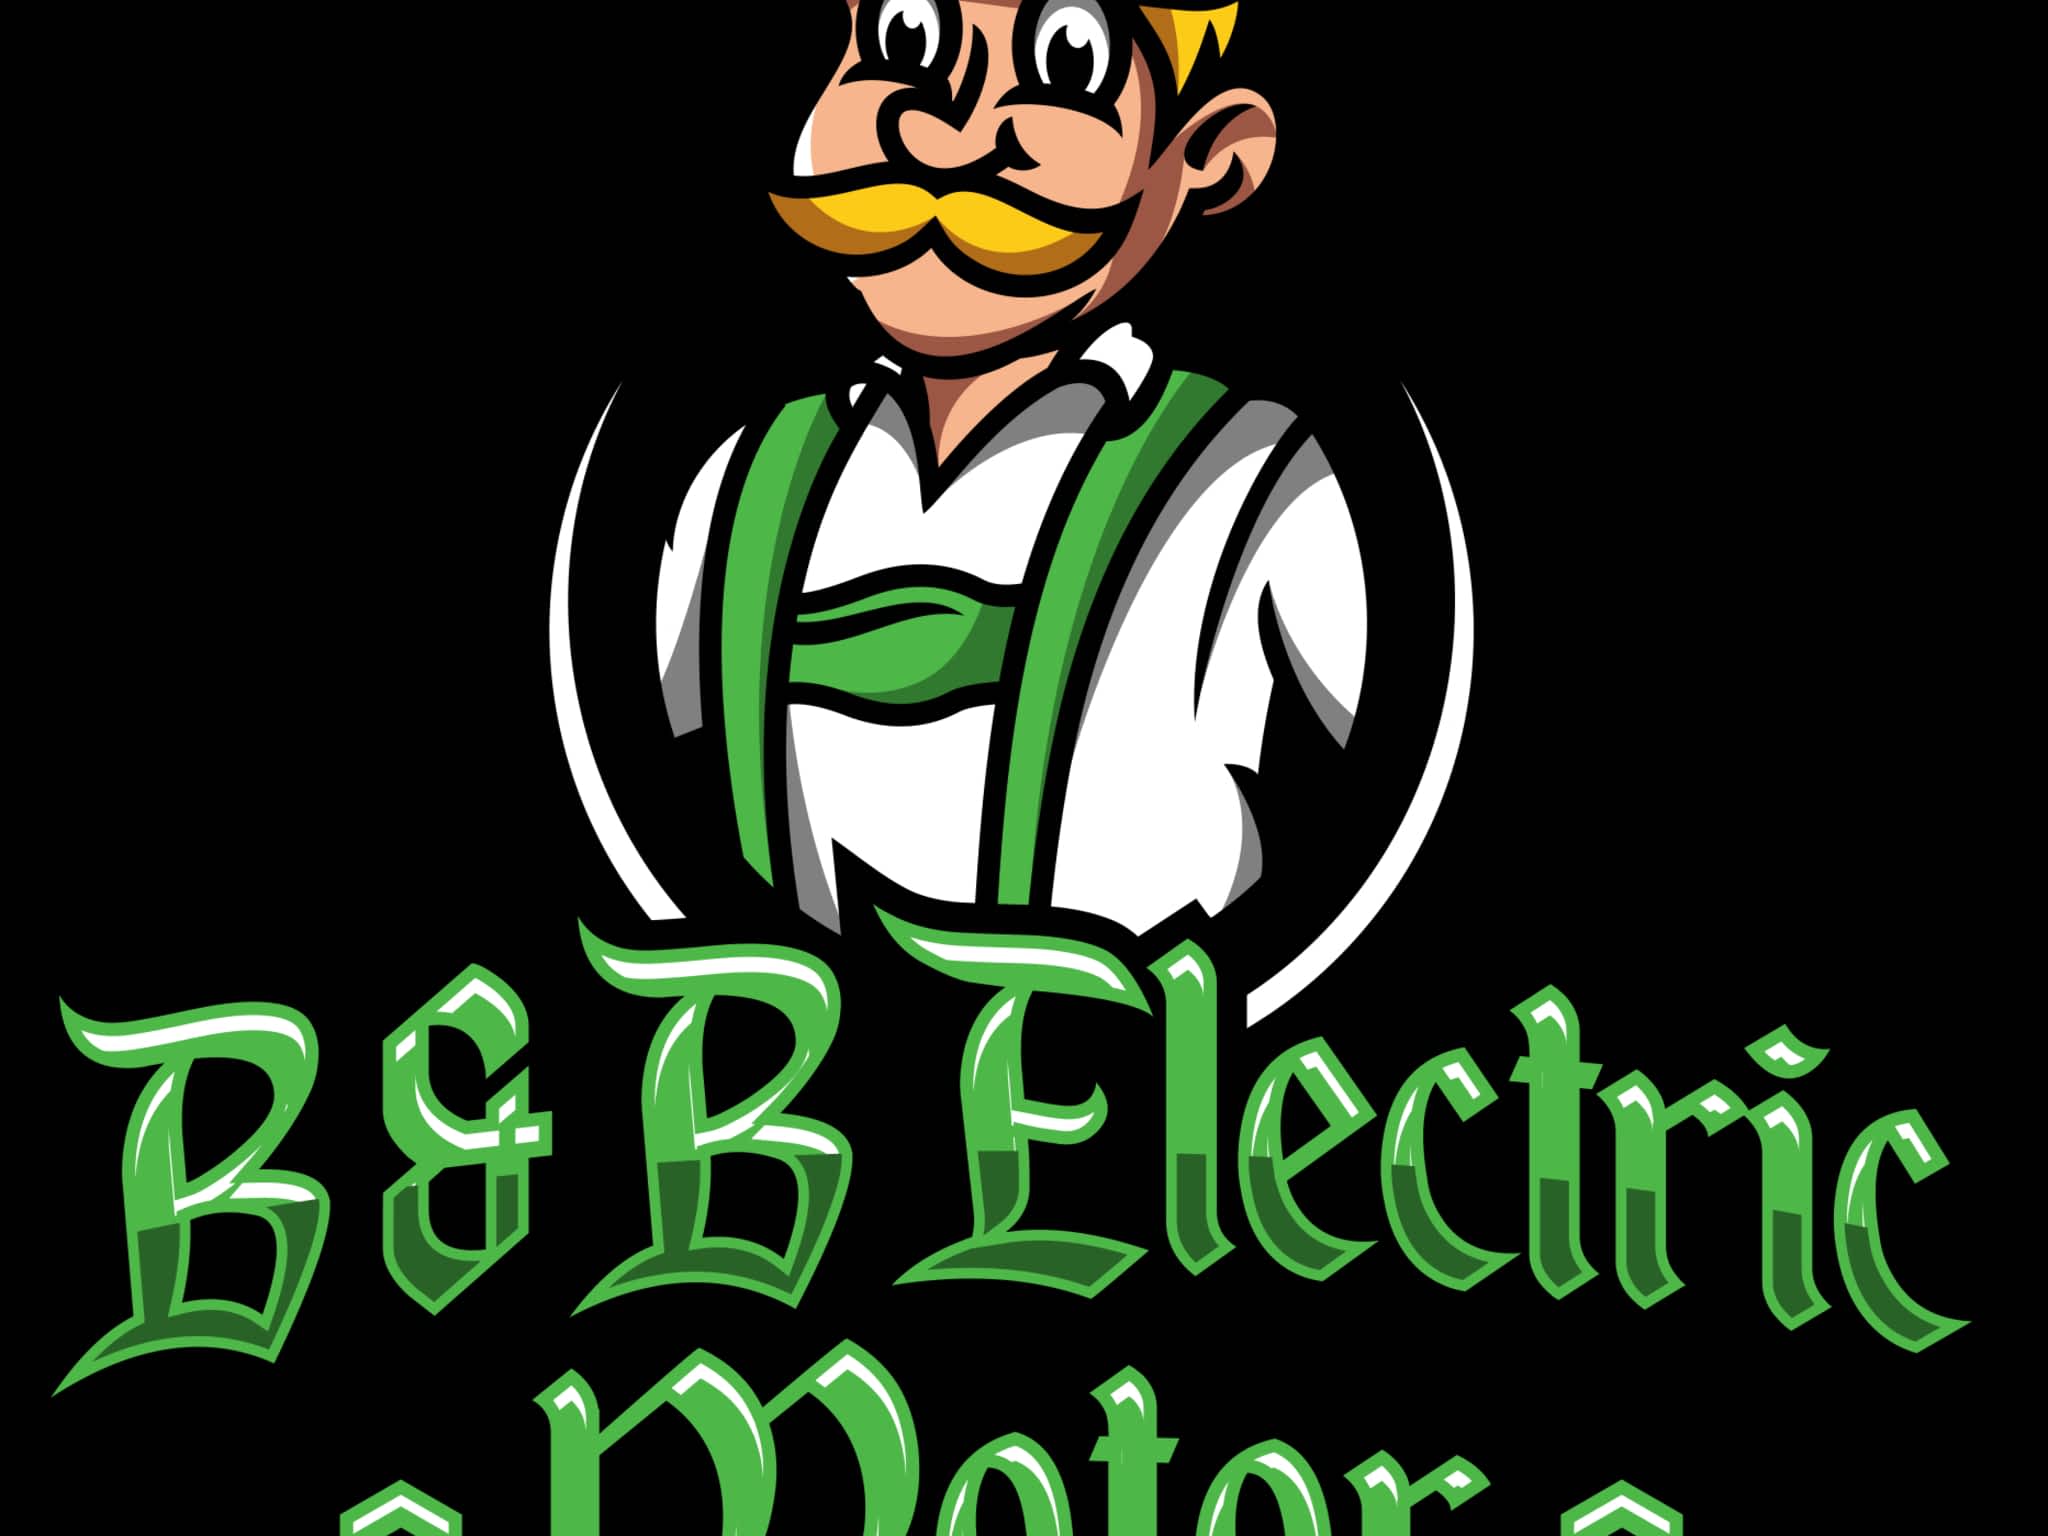 photo B & B Bearing & Electric Motor